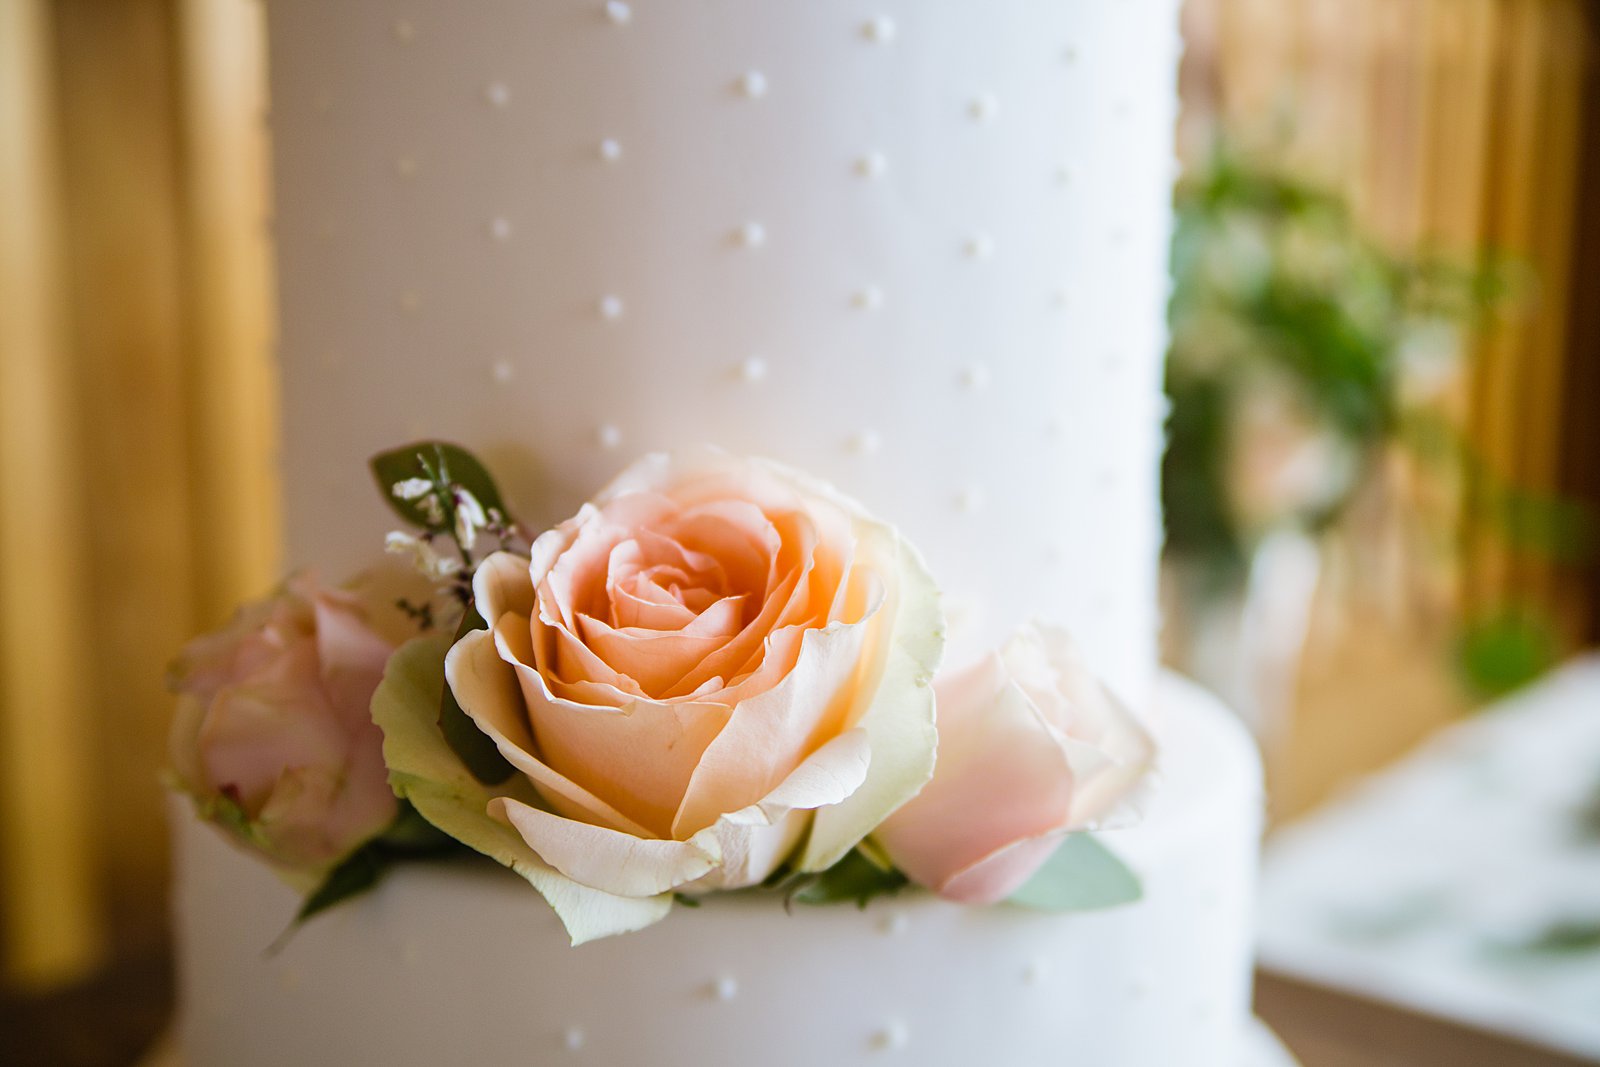 Simple white and copper wedding cake by Arizona wedding photographer PMA Photography.